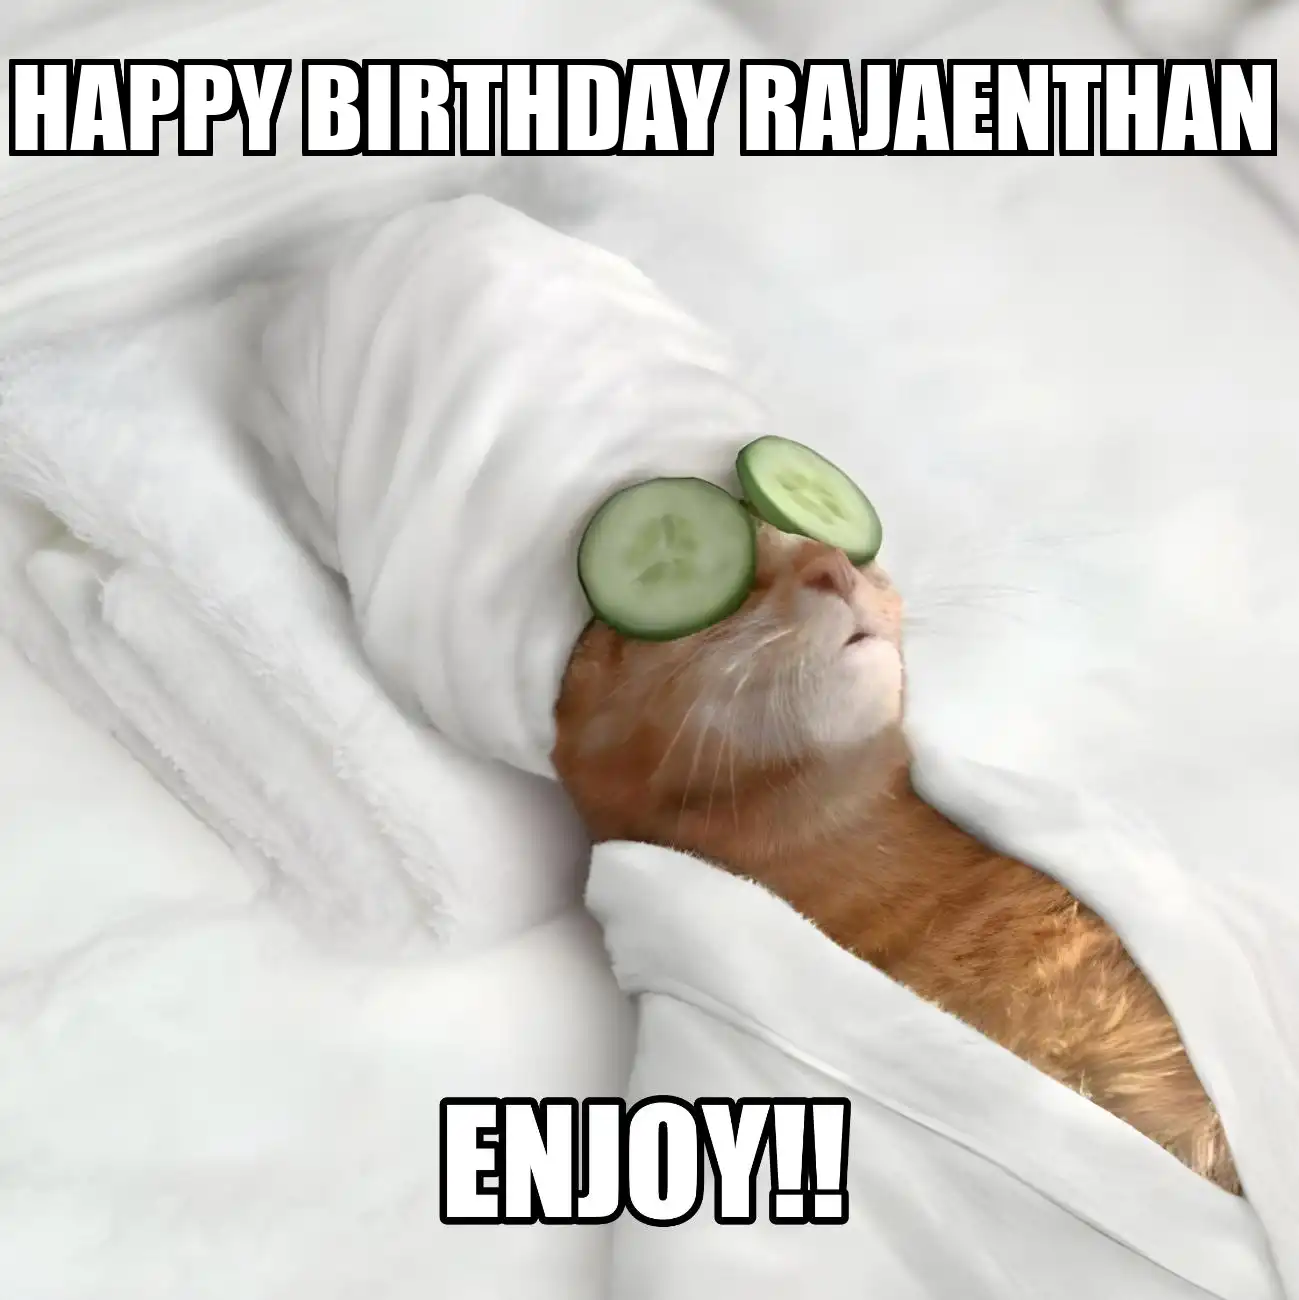 Happy Birthday Rajaenthan Enjoy Cat Meme